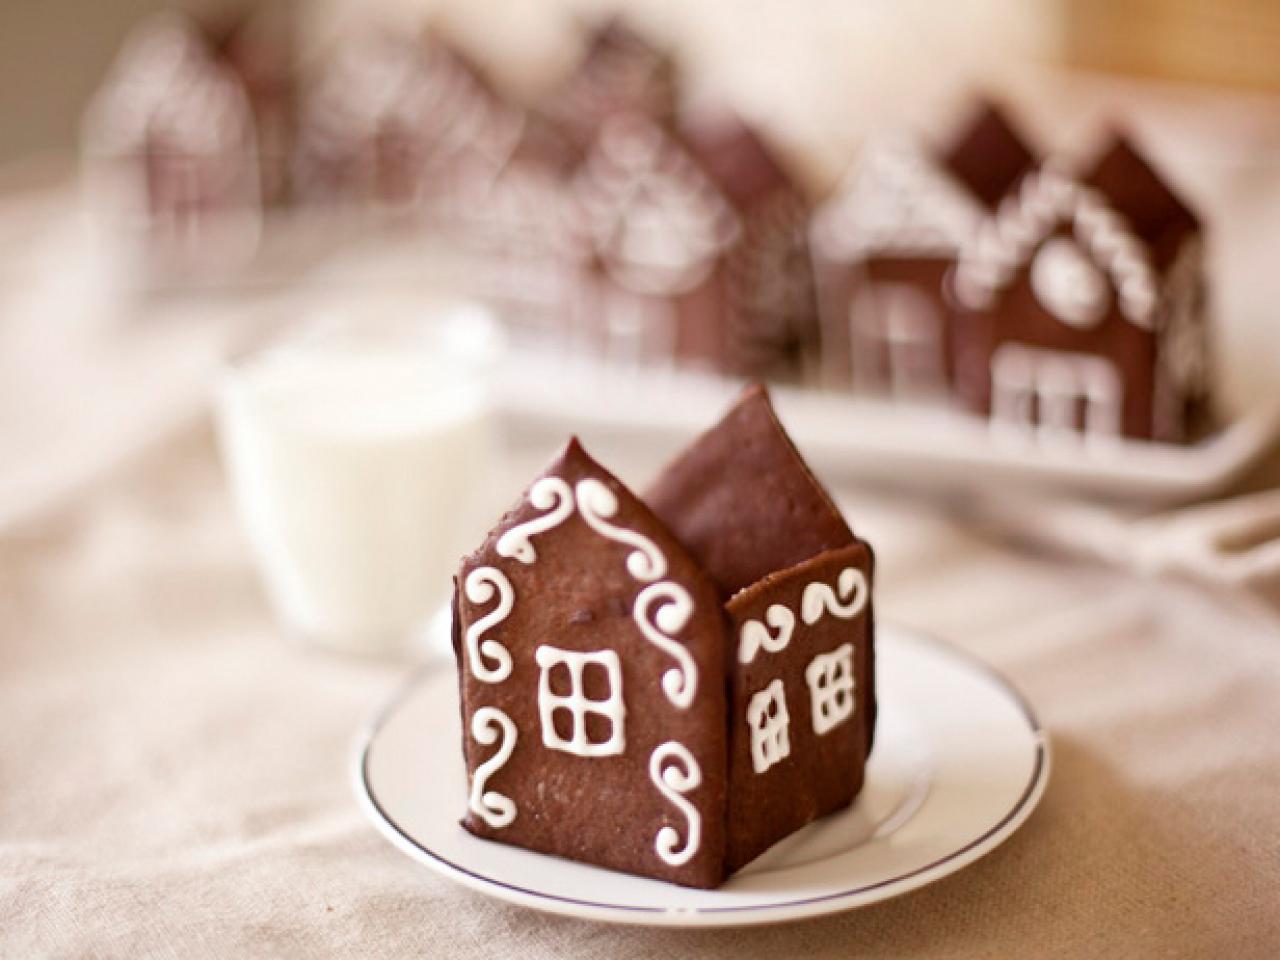 Mini Gingerbread Houses Recipe - Frugal Mom Eh!